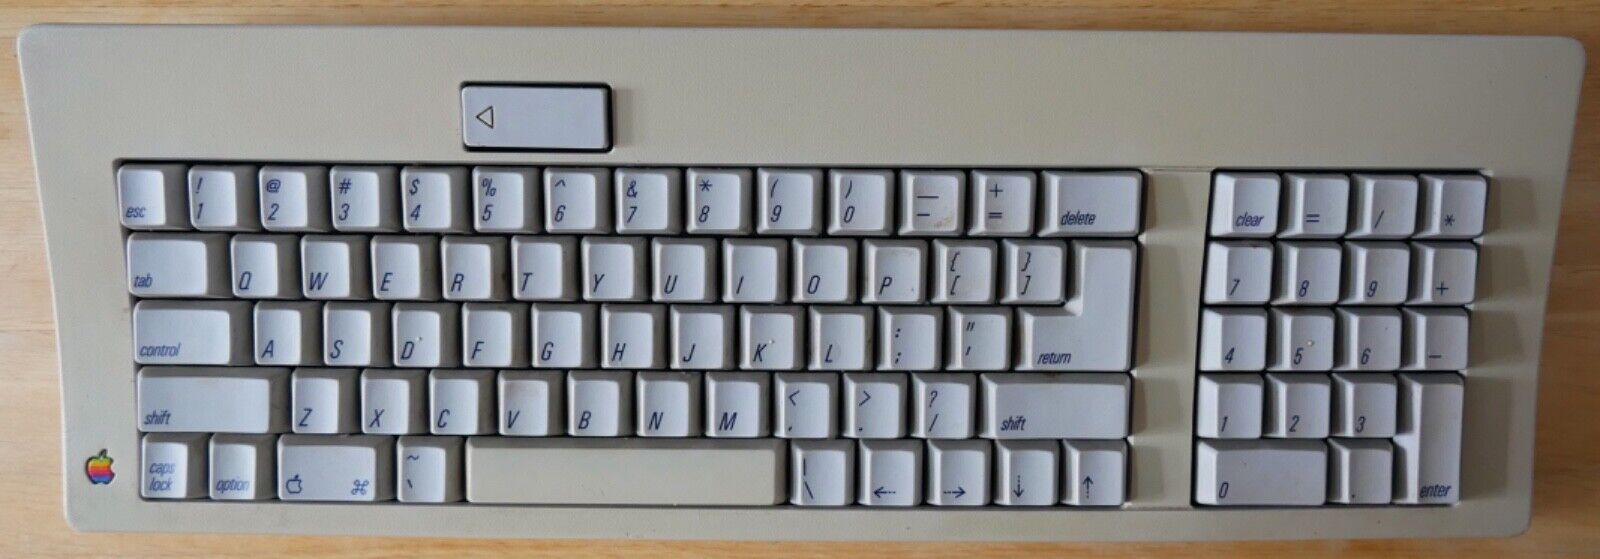 Vintage Apple ADB Extended Keyboard